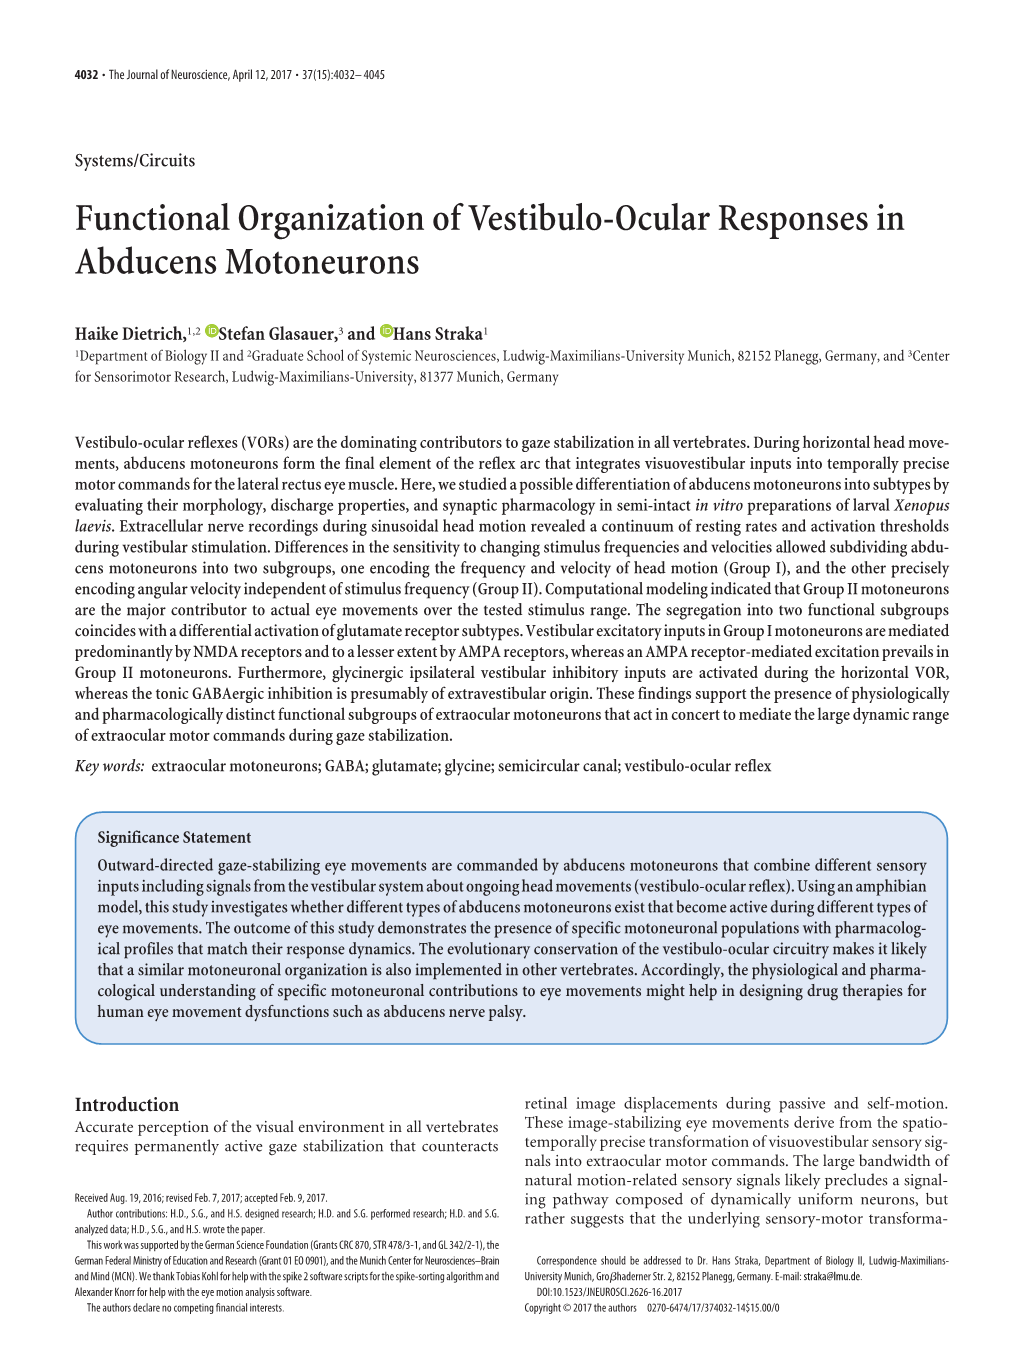 Functional Organization of Vestibulo-Ocular Responses in Abducens Motoneurons